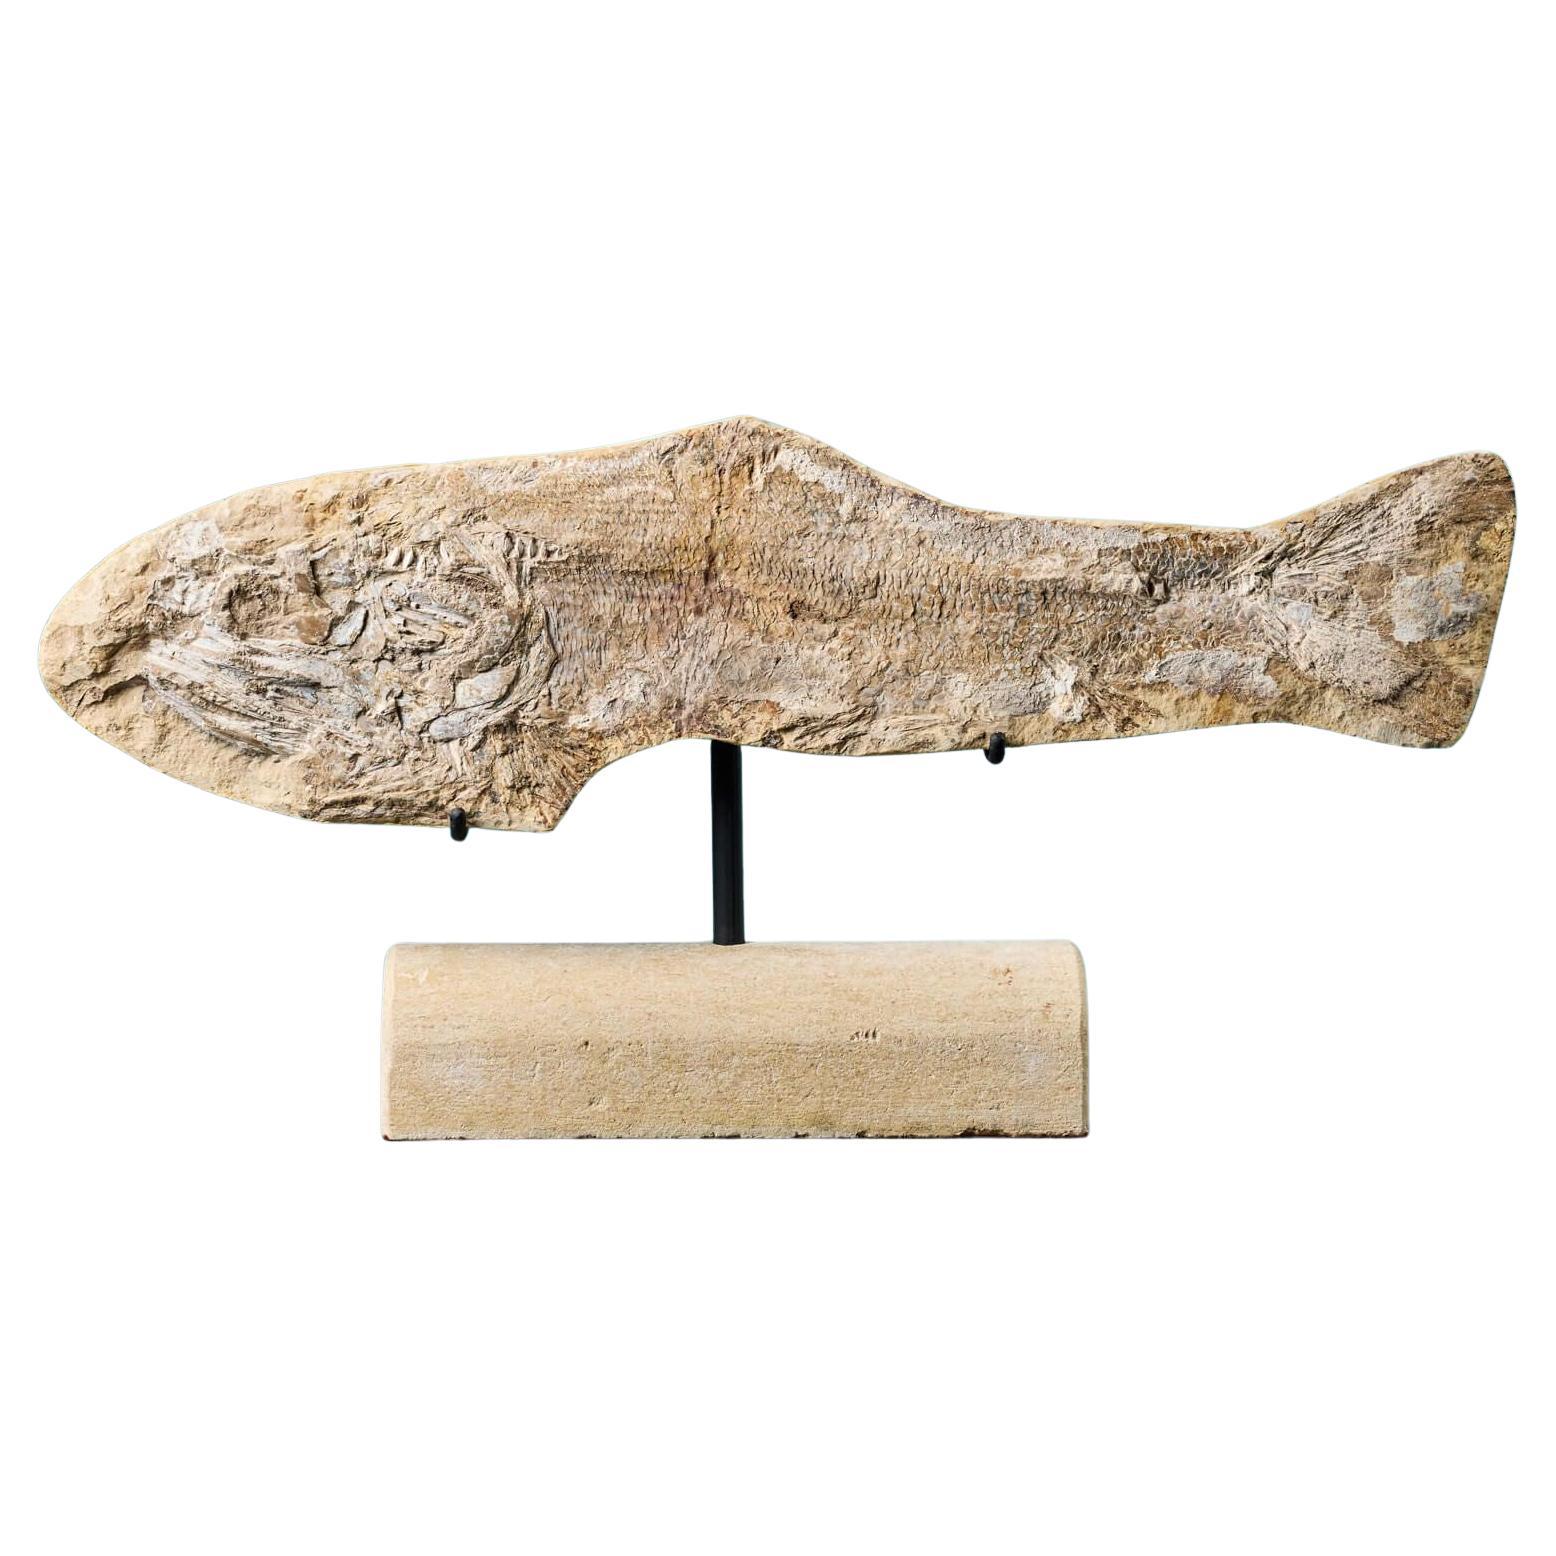 Prehistoric Fossil Fish Specimen